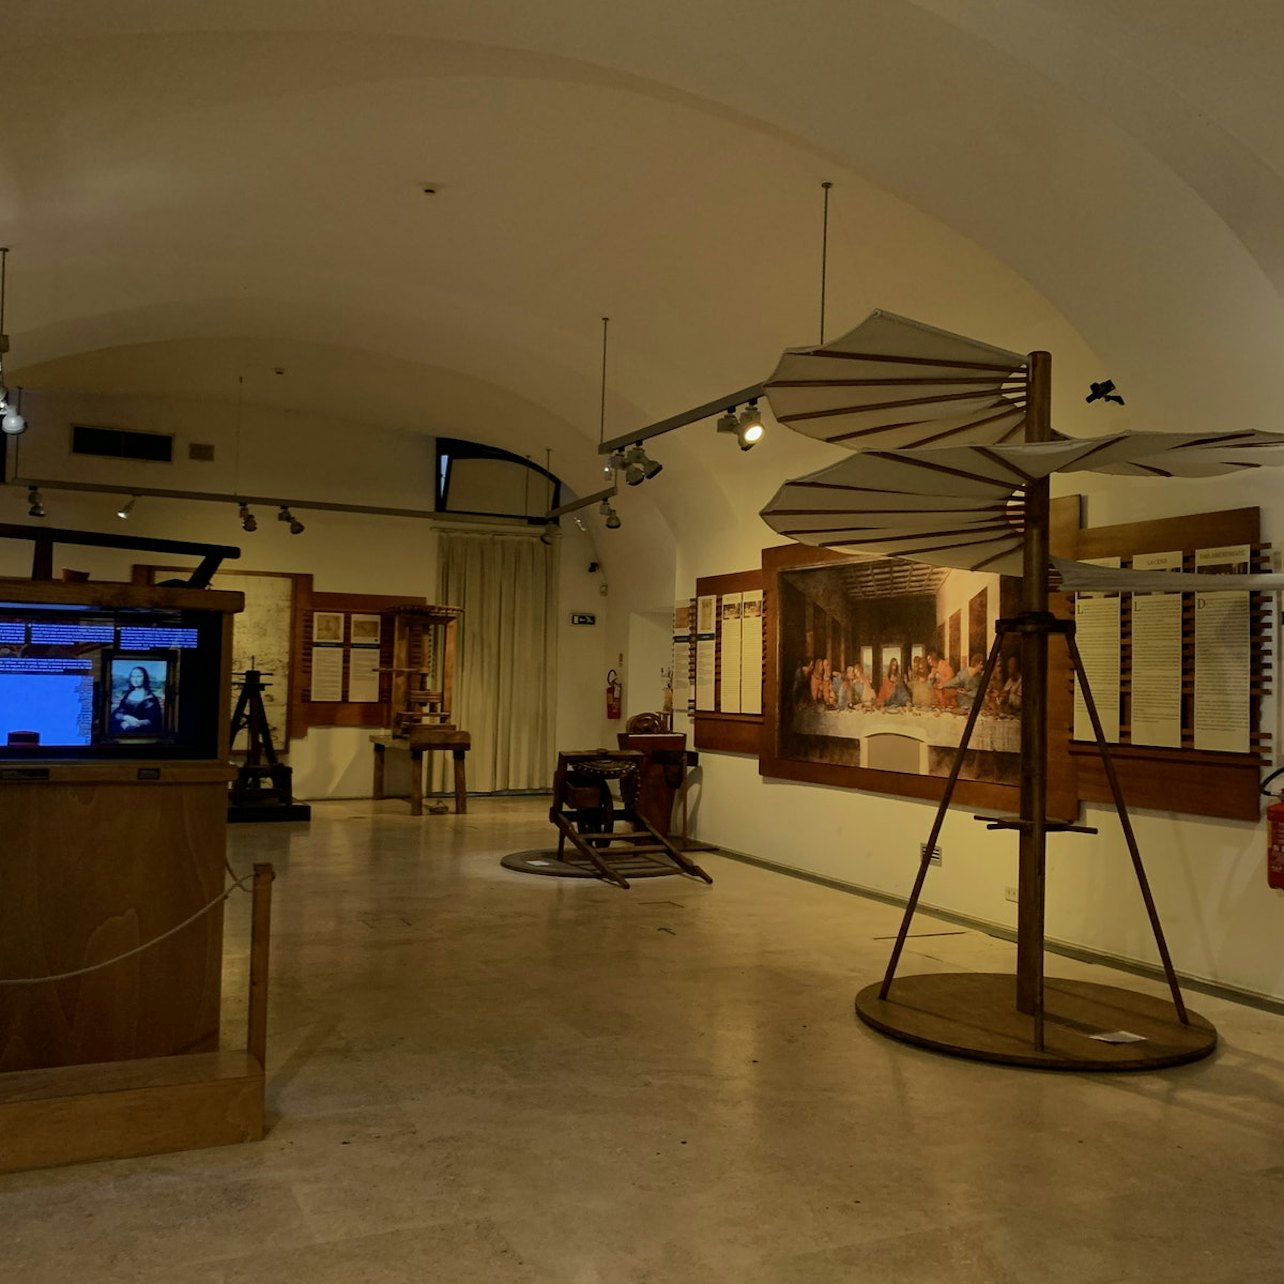 Leonardo da Vinci Exhibition - The Genius of Leonardo: Priority Entrance - Accommodations in Rome